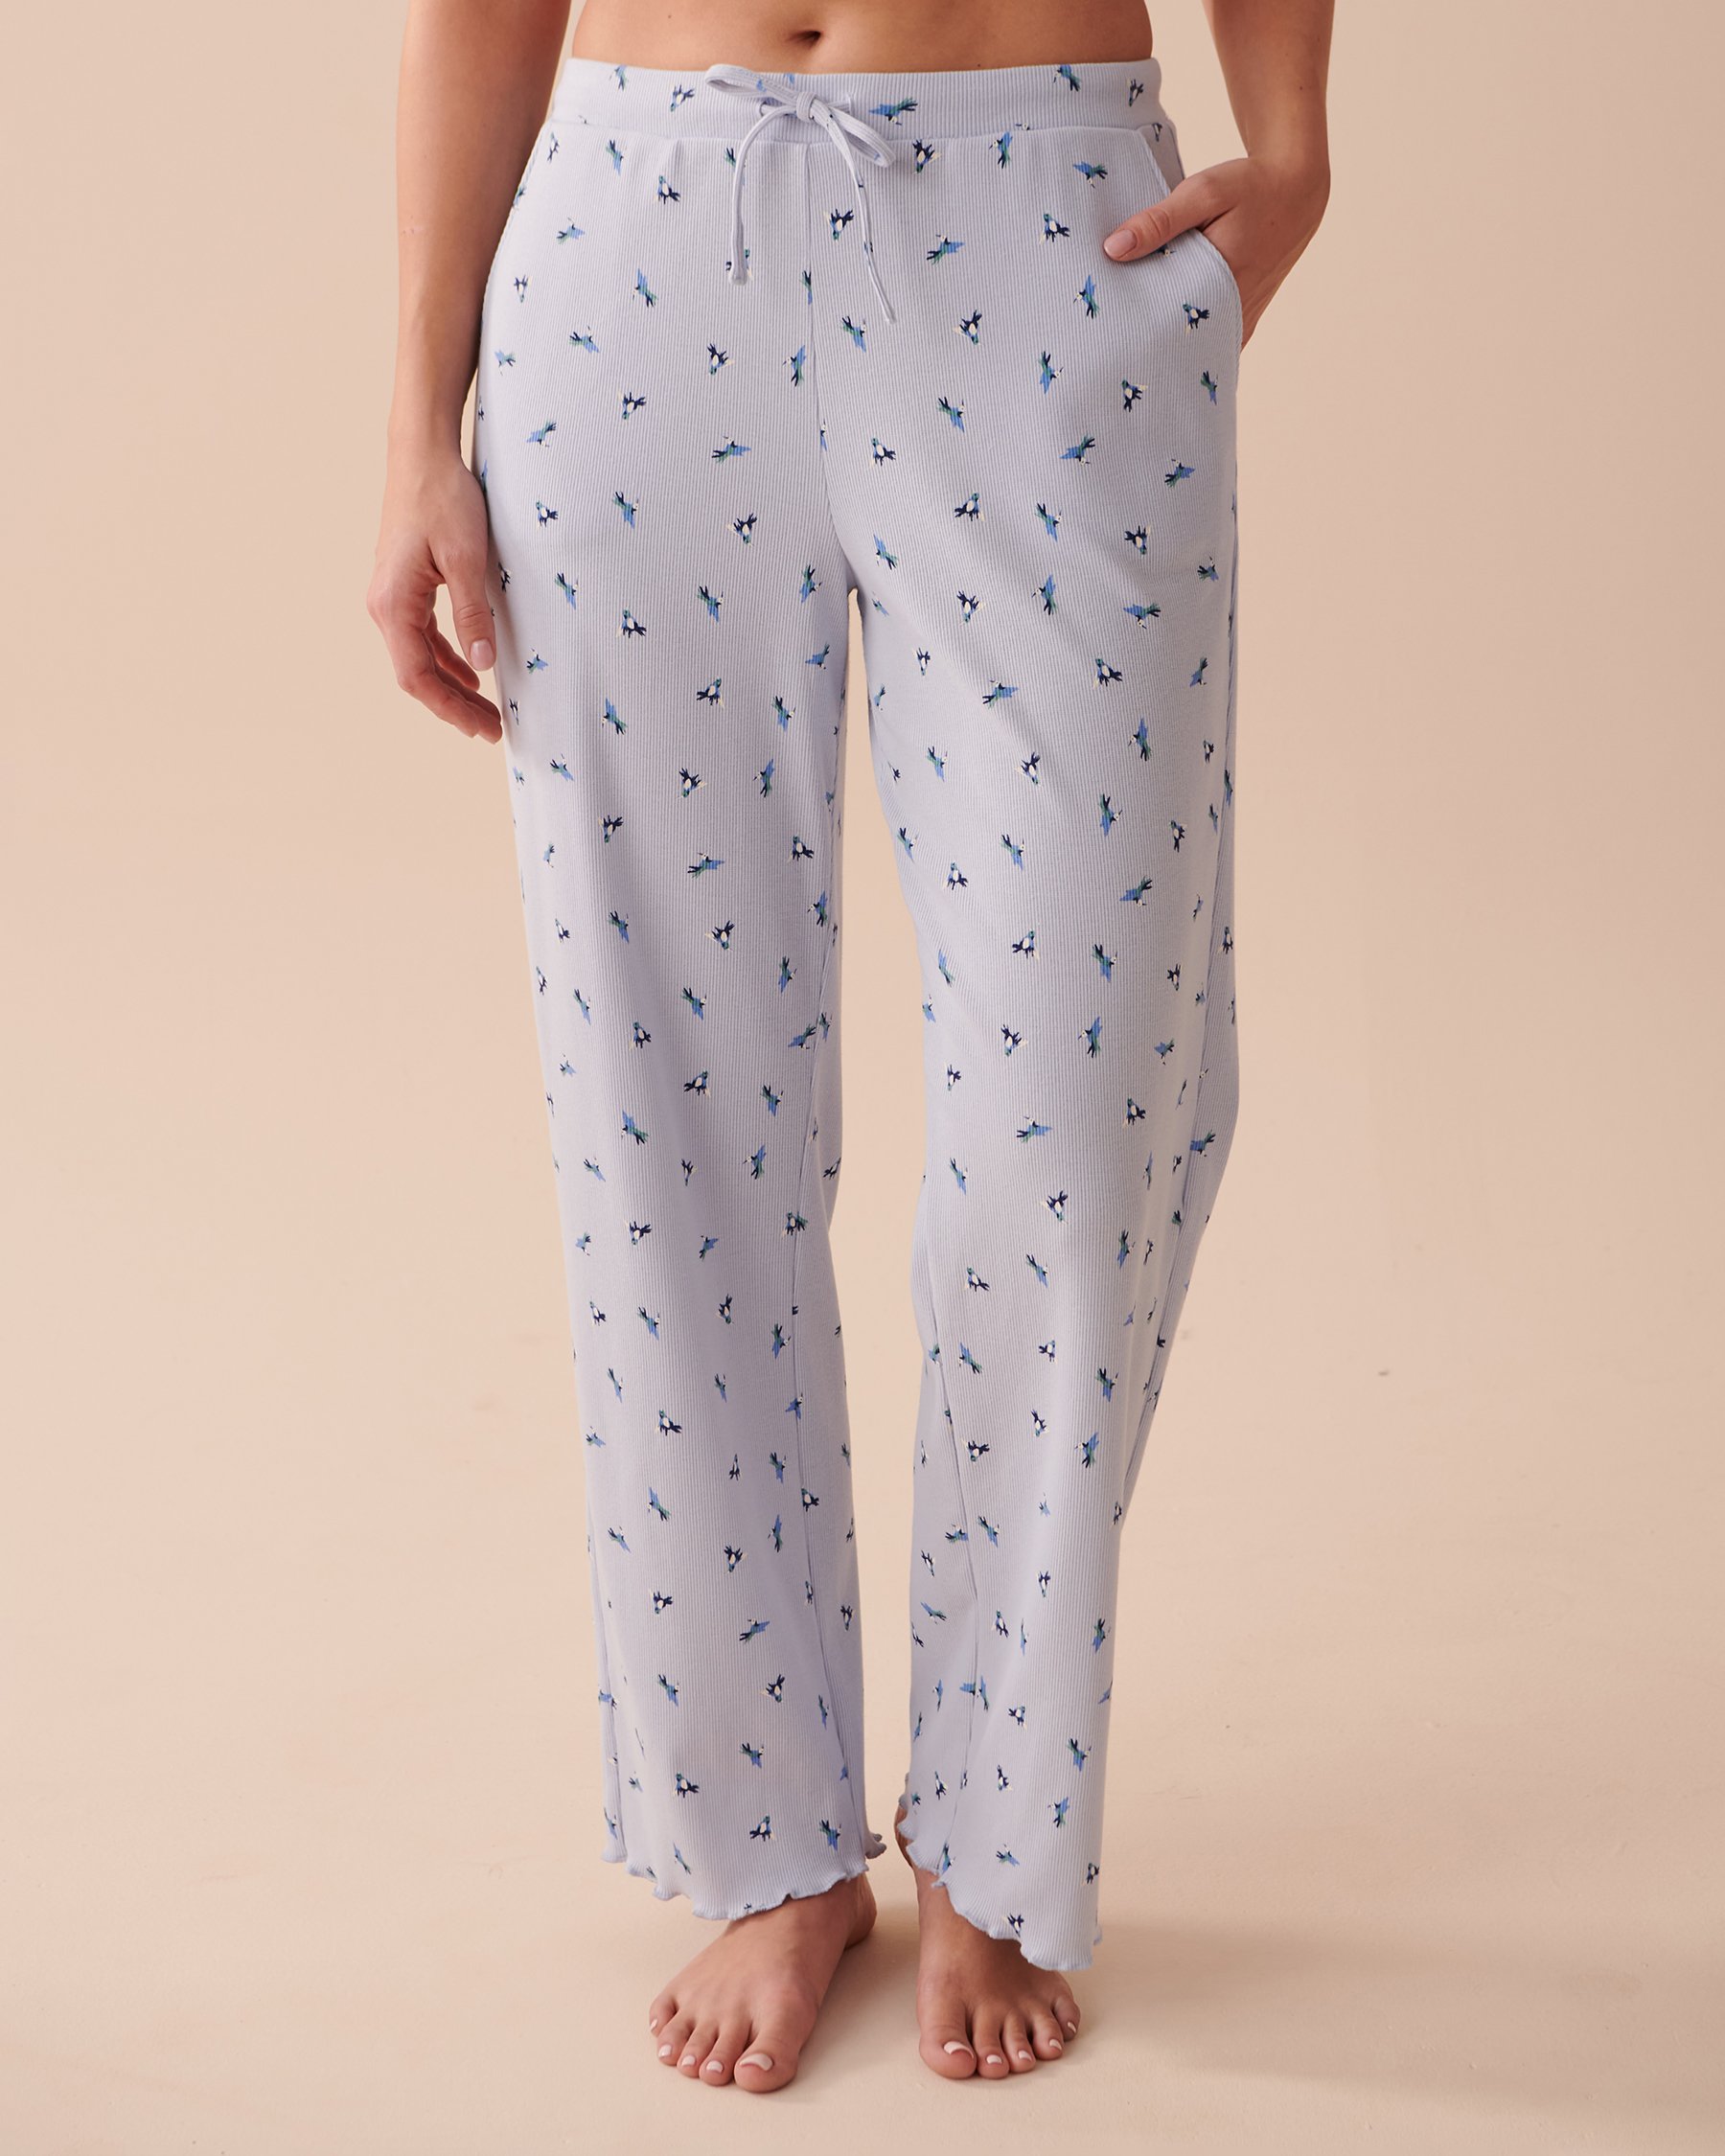 Women Plaid Pajama Pants Sleepwear, Women Lounge Pants Comfy Best Gift